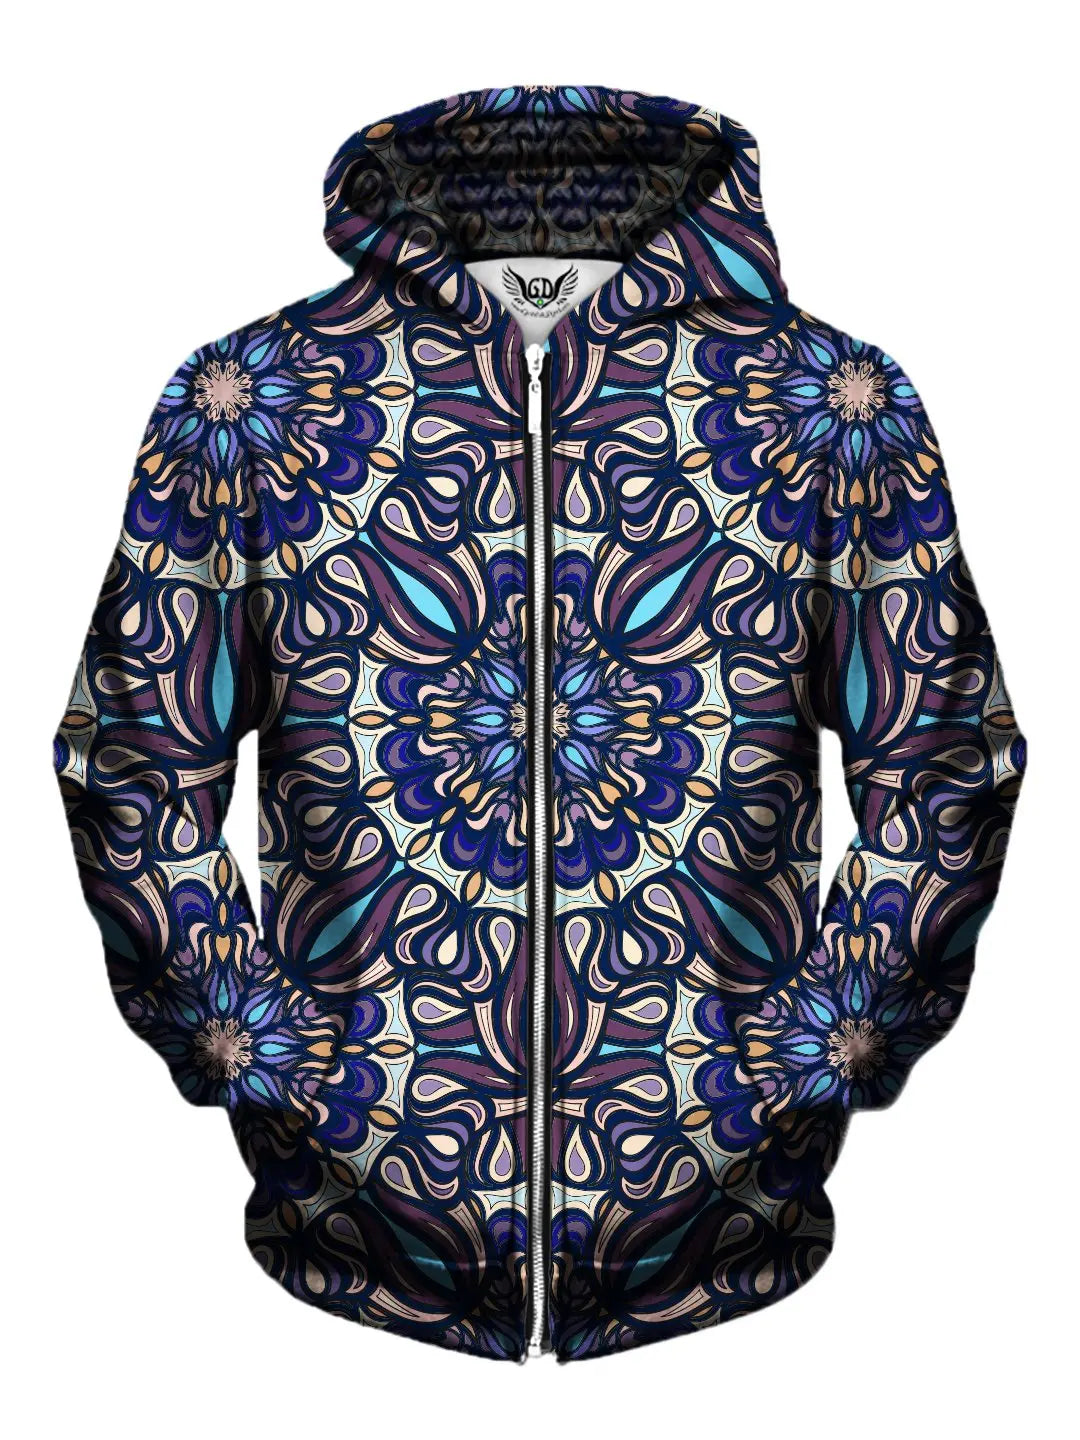 Men's blue, purple & orange psychedelic mandala zip-up hoodie front view.